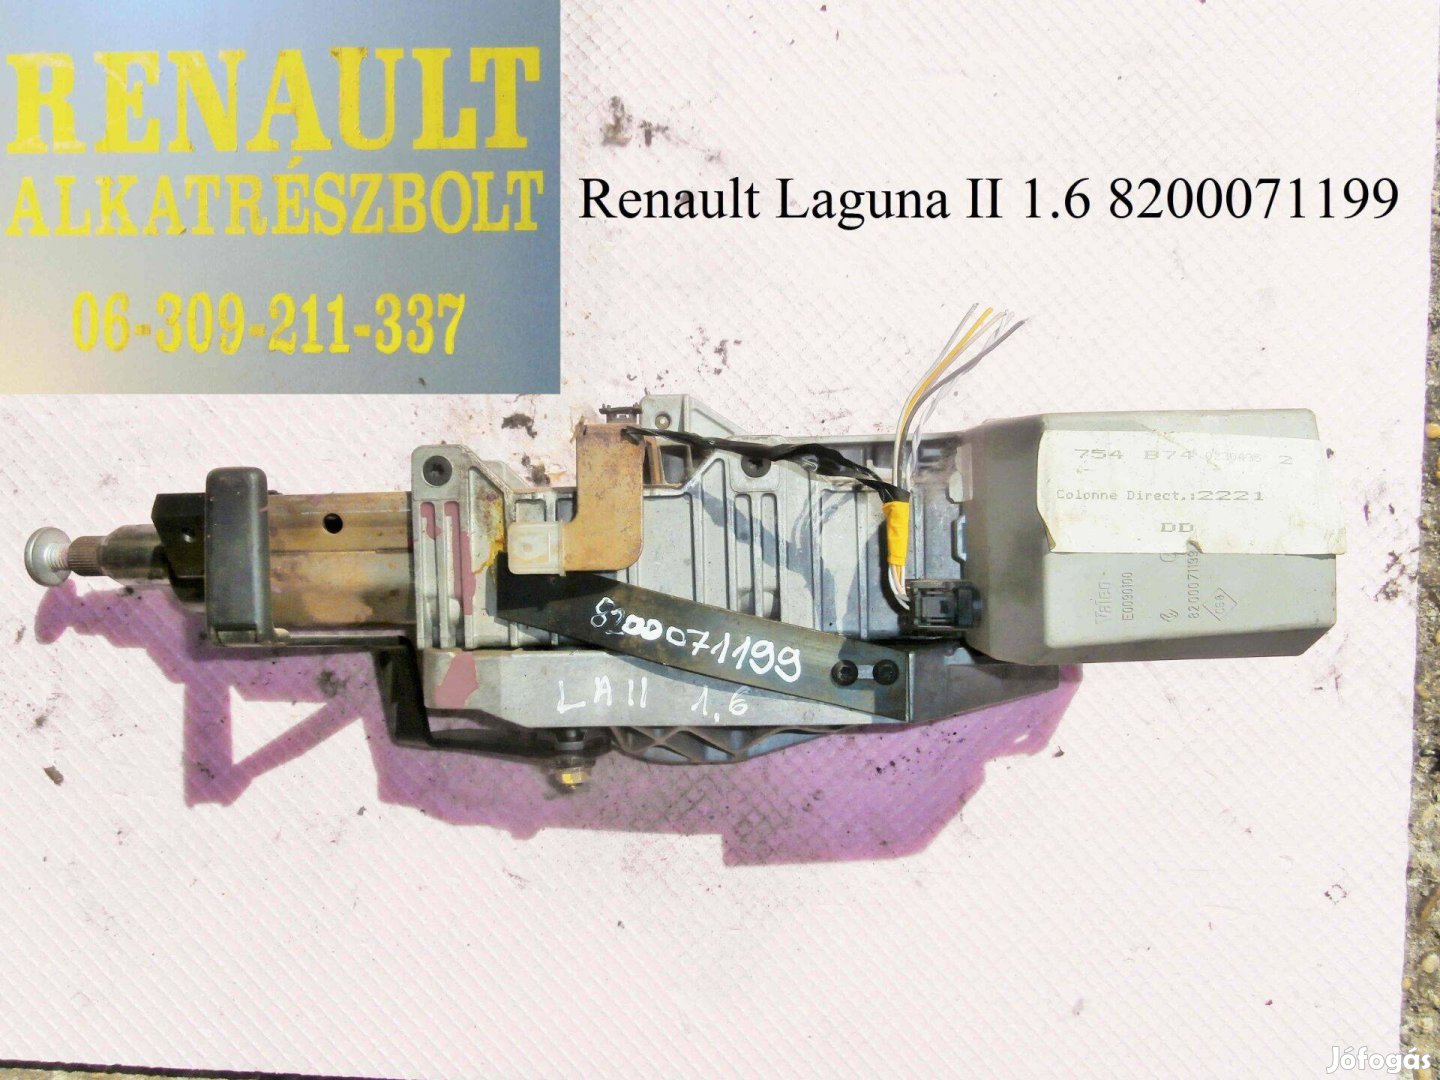 Renault Laguna II 1.6 8200071199 kormányoszlop